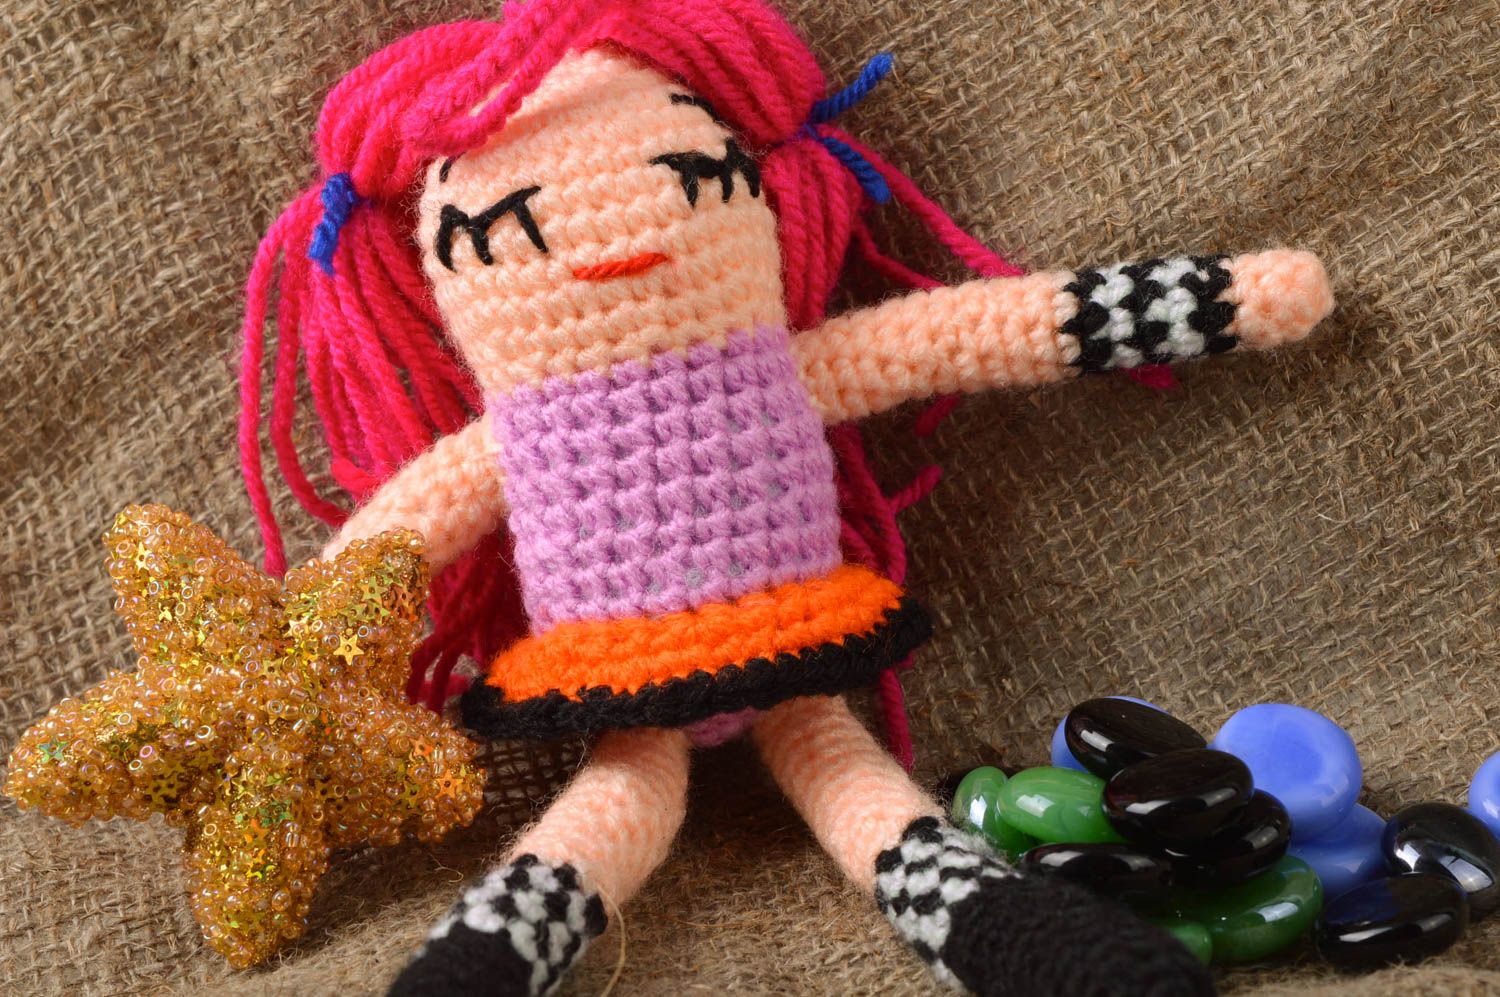 Muñeca artesanal con pelo rosado divertida juguete tejido a ganchillo de hilos  foto 1